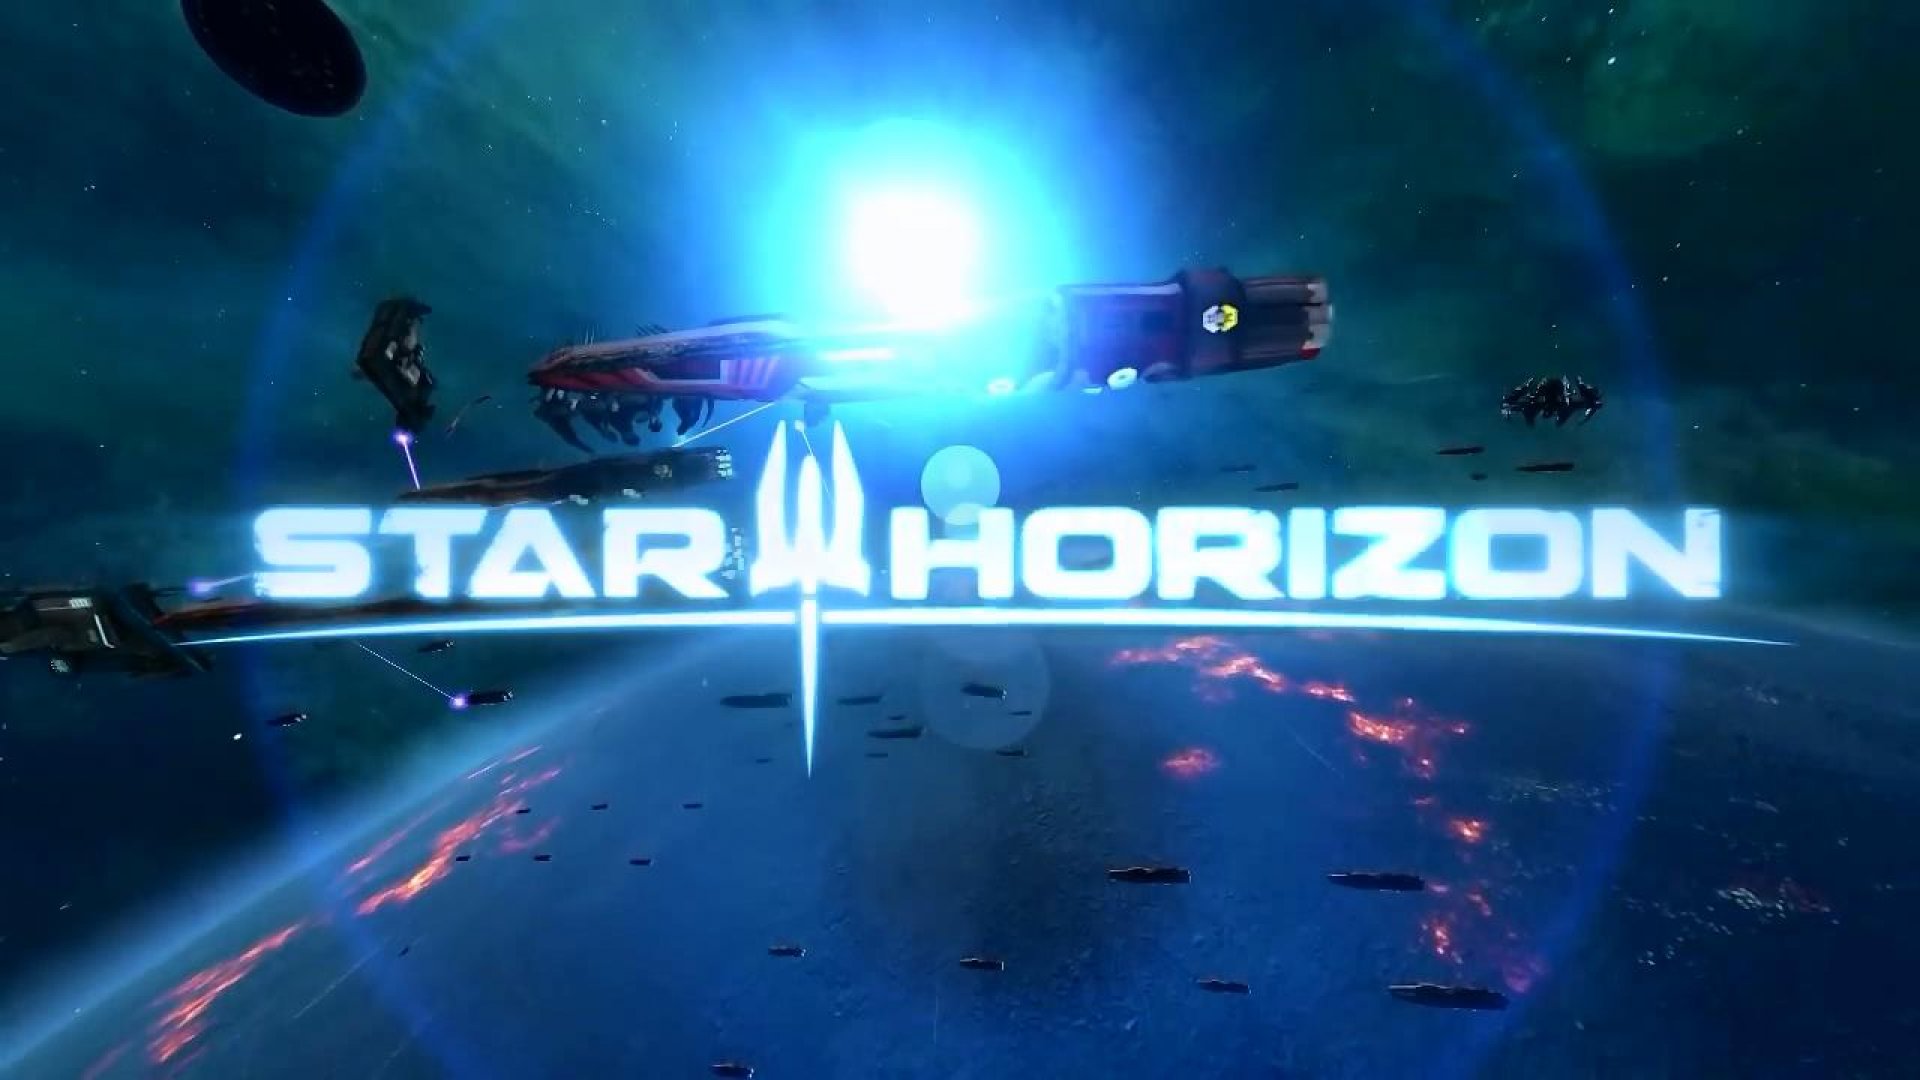 Stars horizon. Star Horizon. Космический боевик игра. Star Horizon game. Horizon Star* II 8рядов.